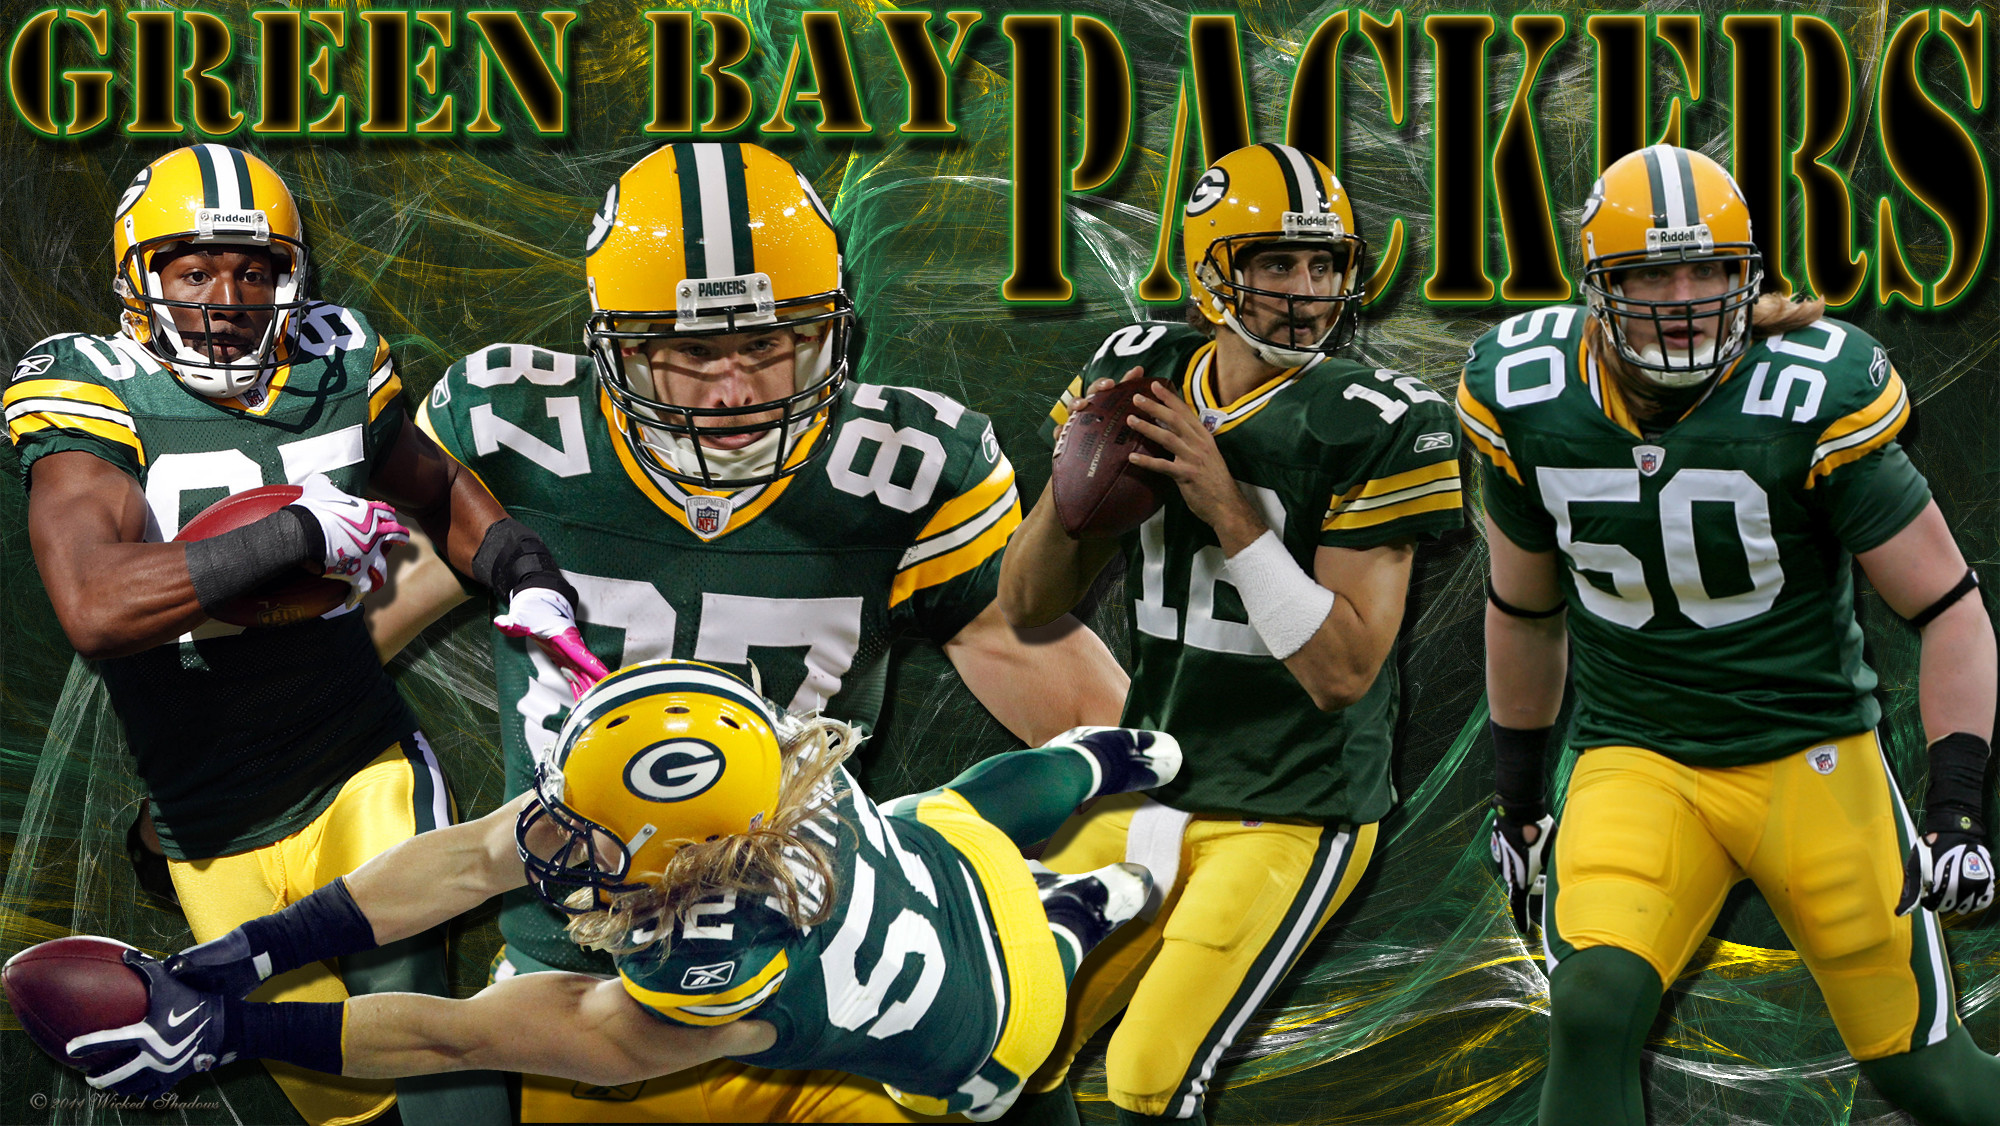 2000x1126 Green Bay Packers Team Wallpaper